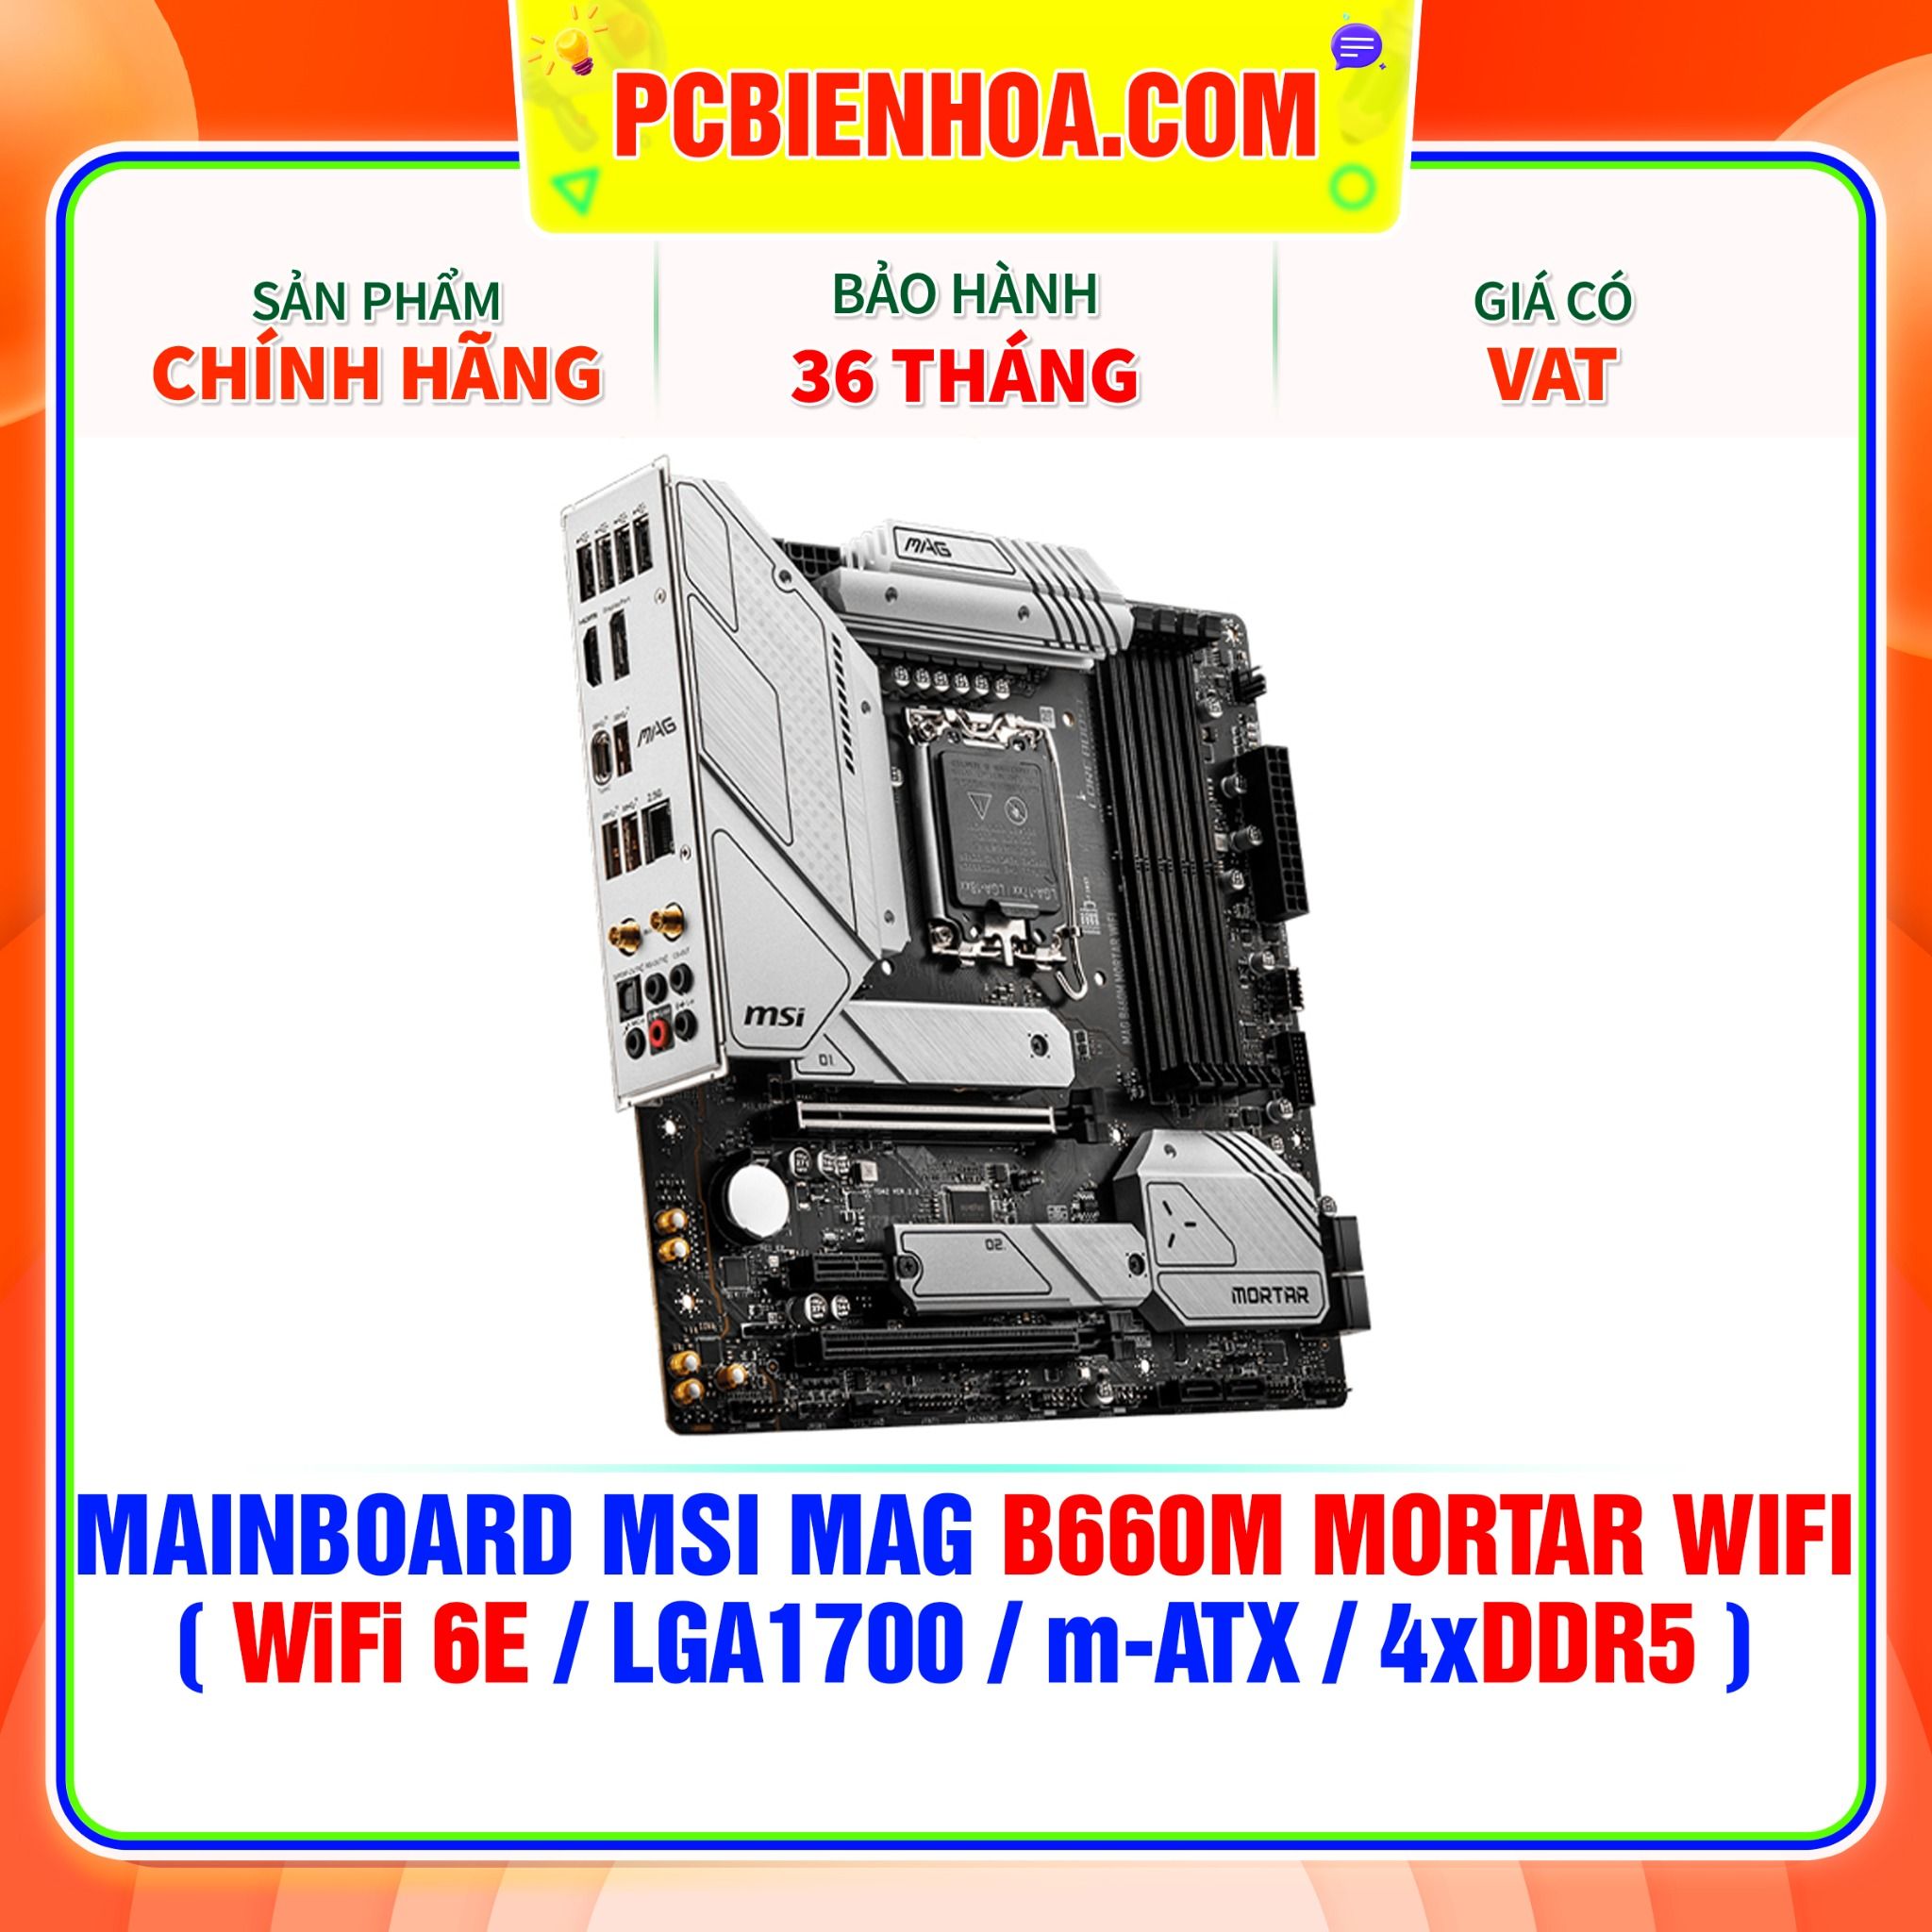  DDR5 - MAINBOARD MSI MAG B660M MORTAR WIFI  ( WiFi 6E / LGA1700 / m-ATX / 4xDDR5 ) 